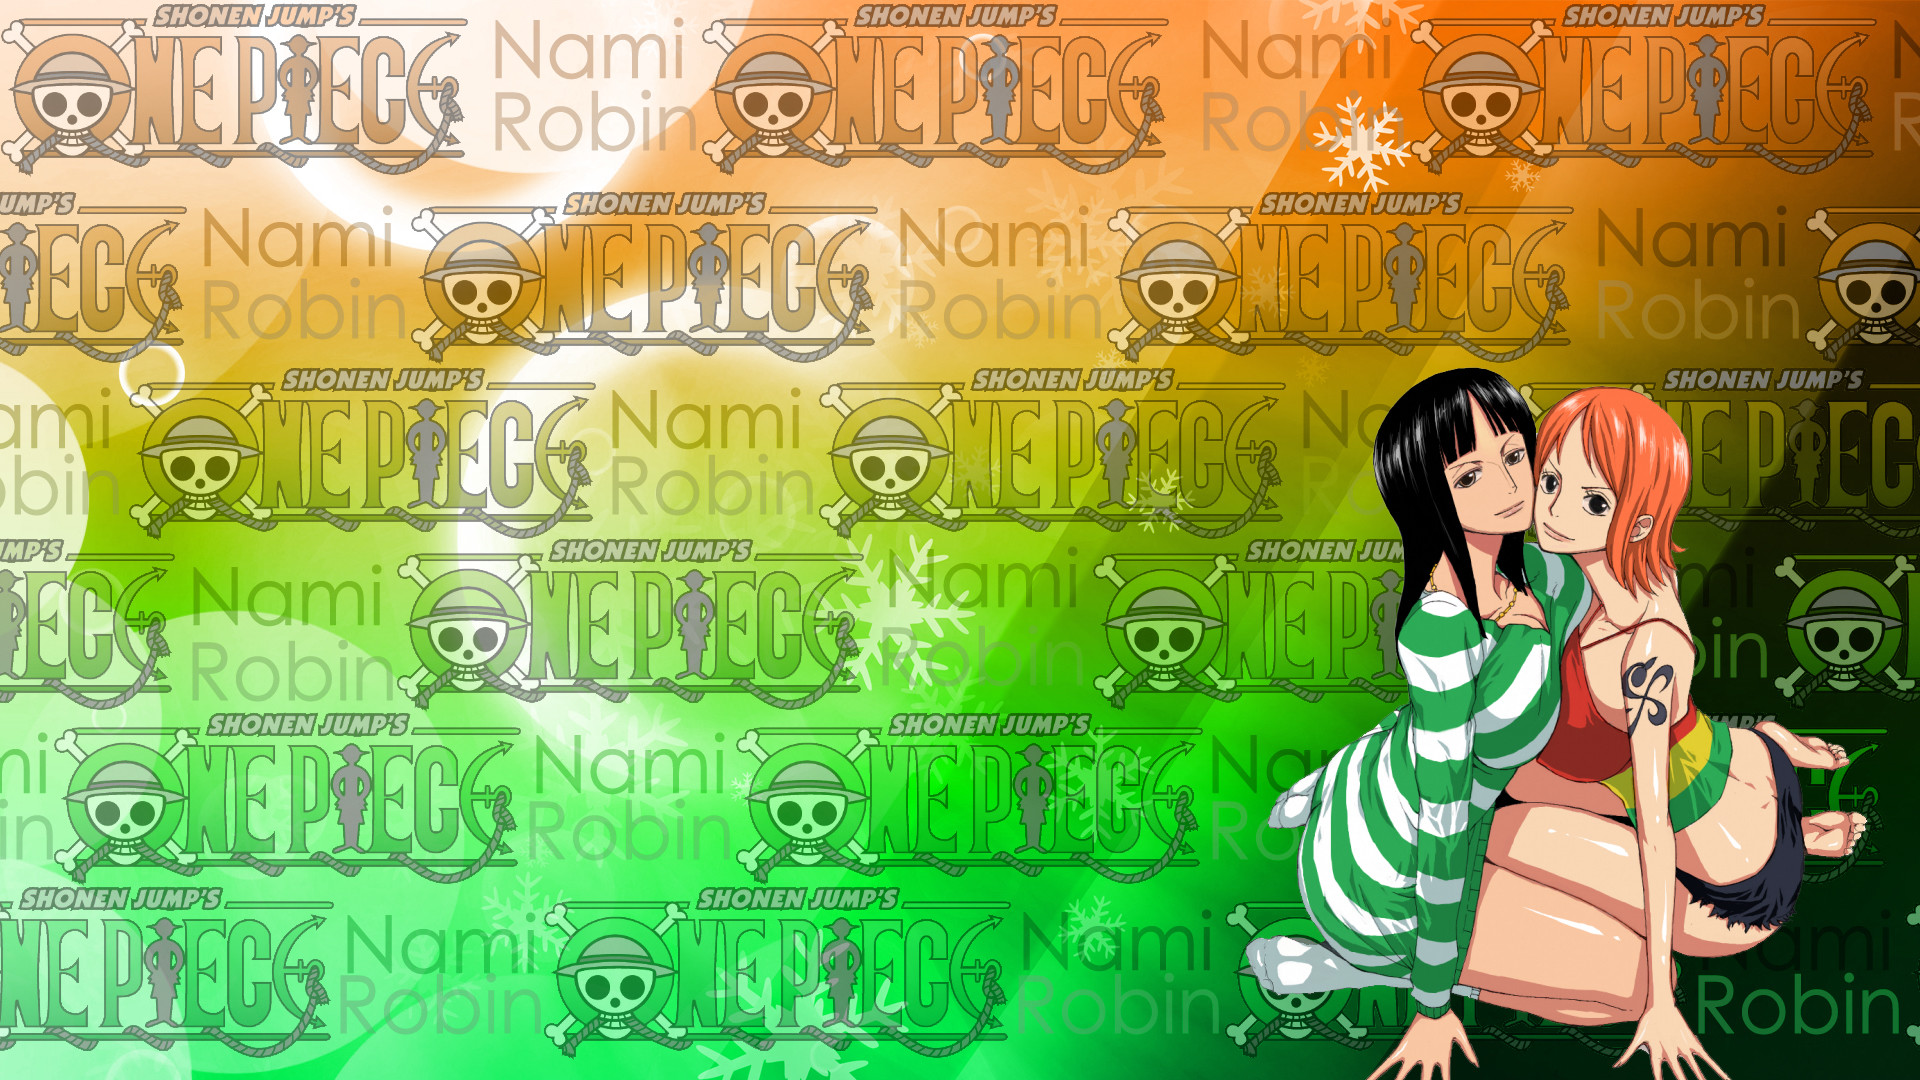 1920x1080 Nami X Robin Wallpaper by vJpCreate Nami X Robin Wallpaper by vJpCreate